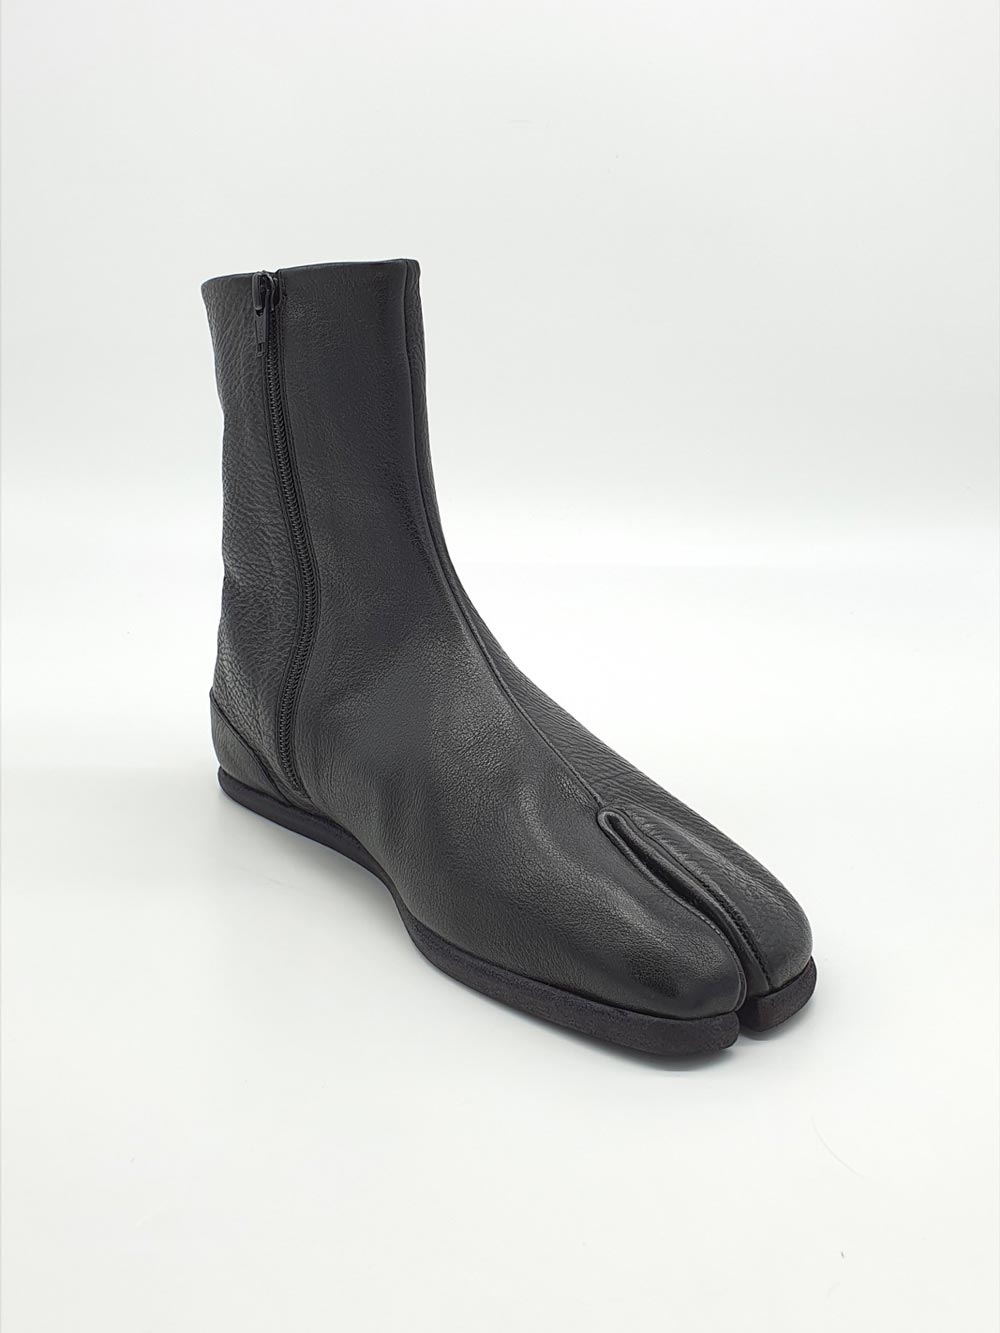 Maison Margiela Tabi Boots (for Pre-order) - Selectionne PH